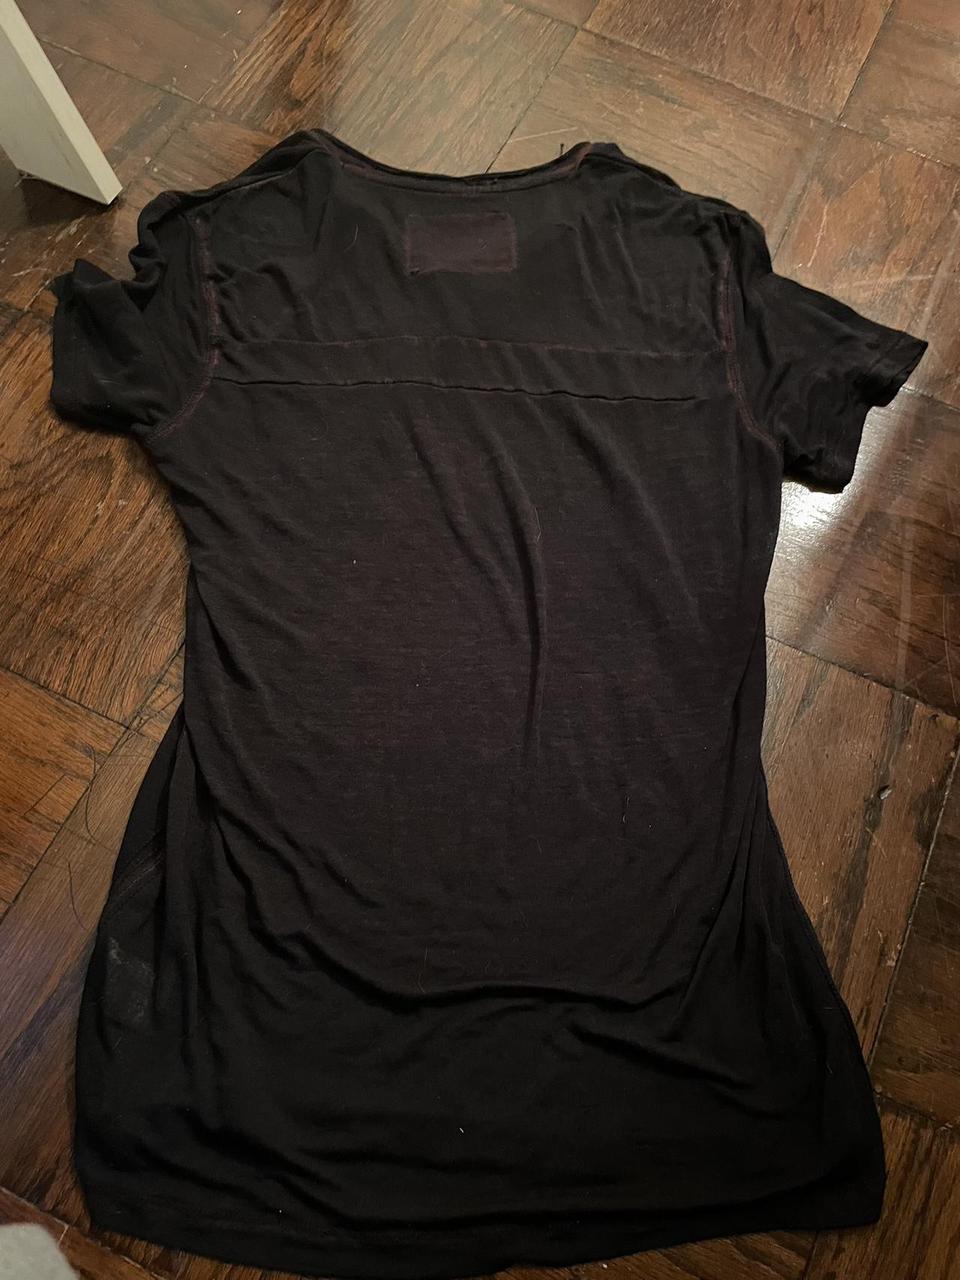 Buckle Black Men's Black Shirt (3)